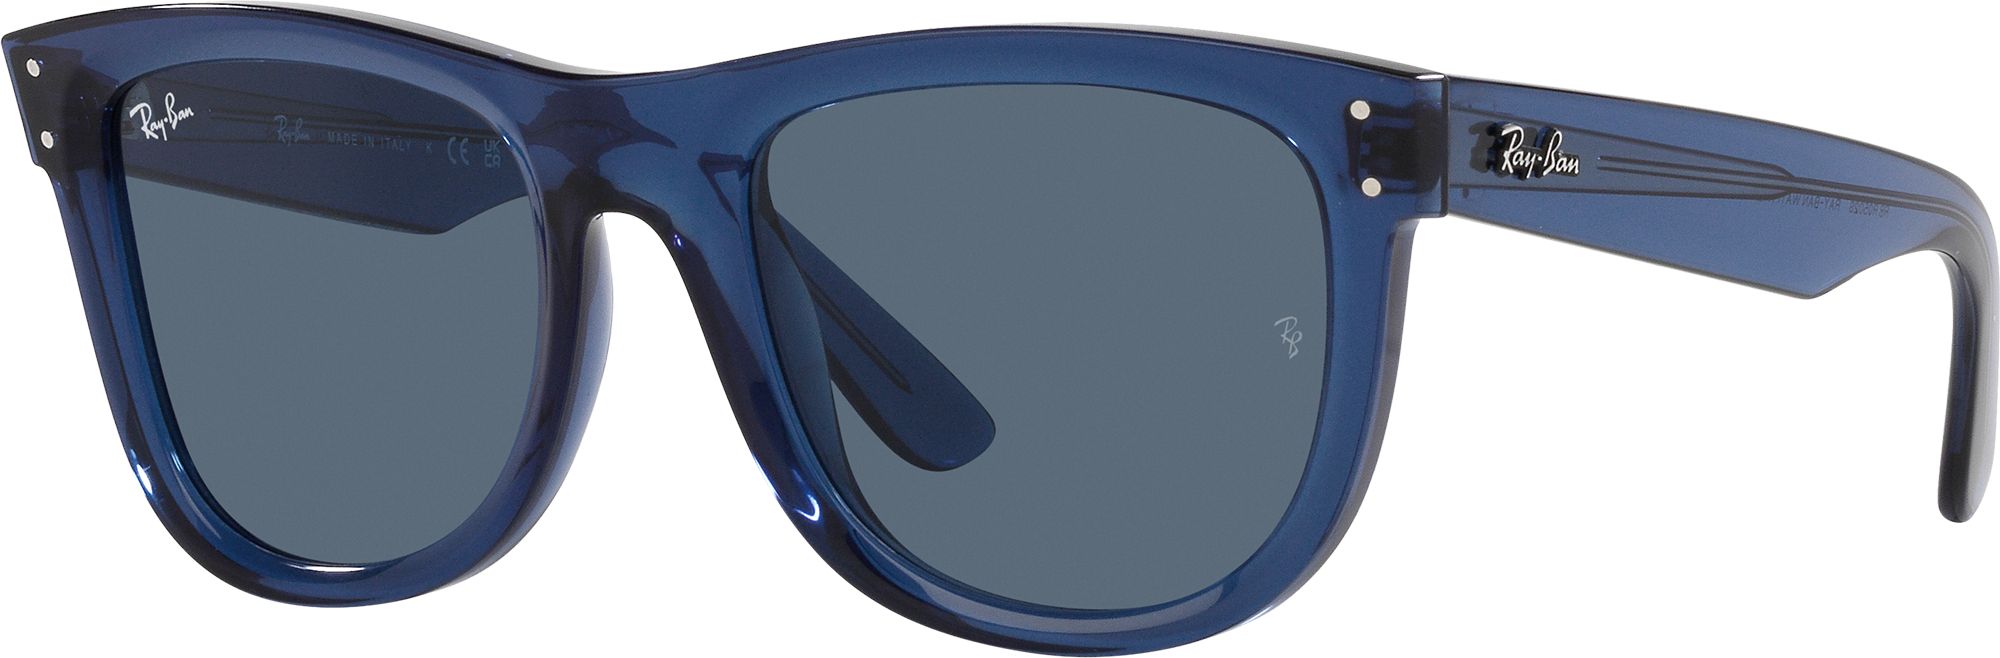 Photos - Sunglasses Ray-Ban Wayfarer Reverse , Men's, Navy Blue/dark Blue 23RYBAWYFR 